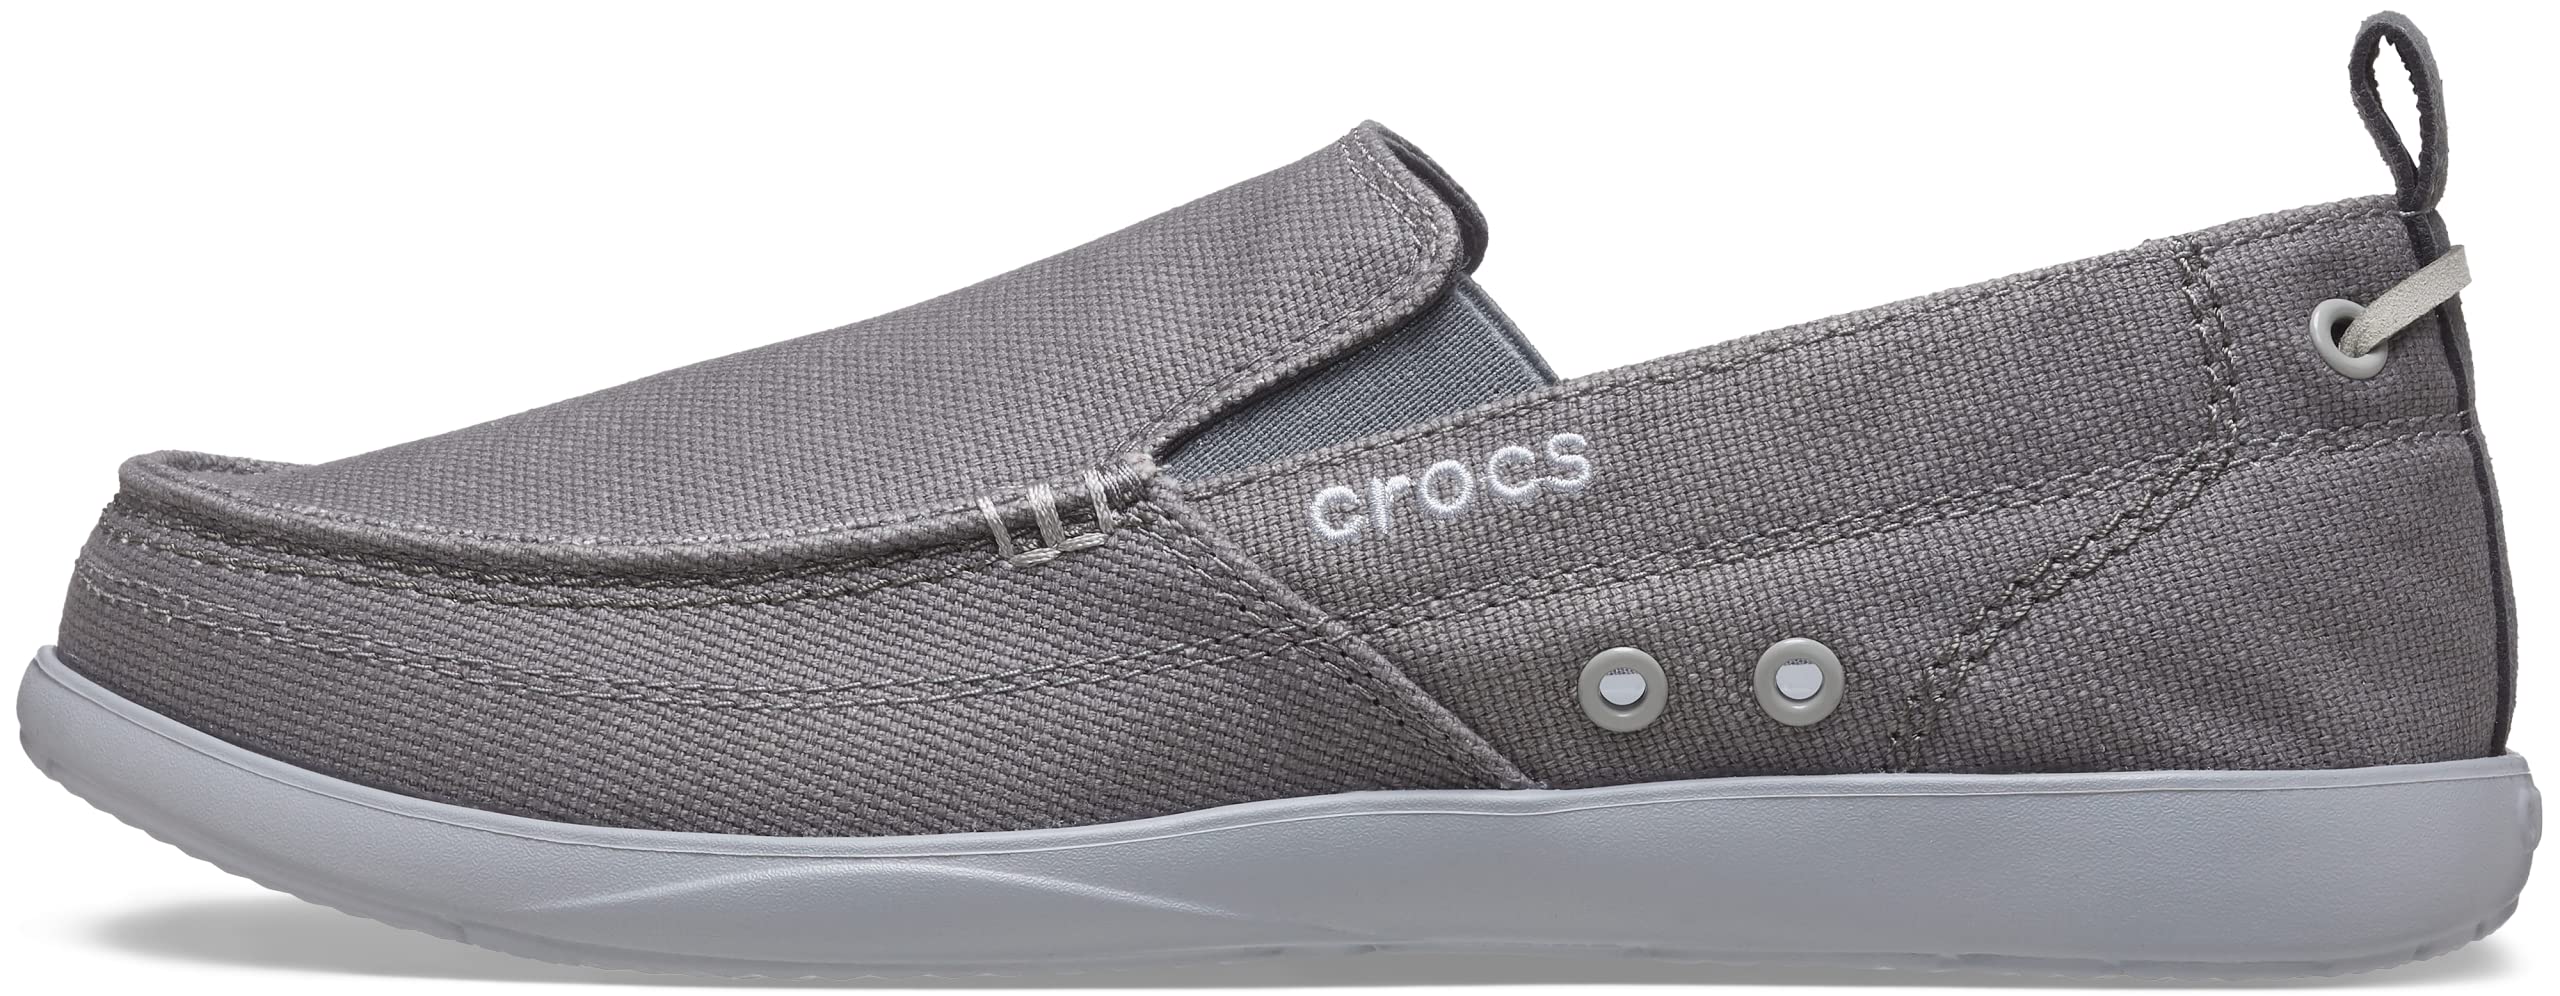 Crocs Men's Walu Slip On Loafer | Casual Men's Loafers | Walking Shoes for Men